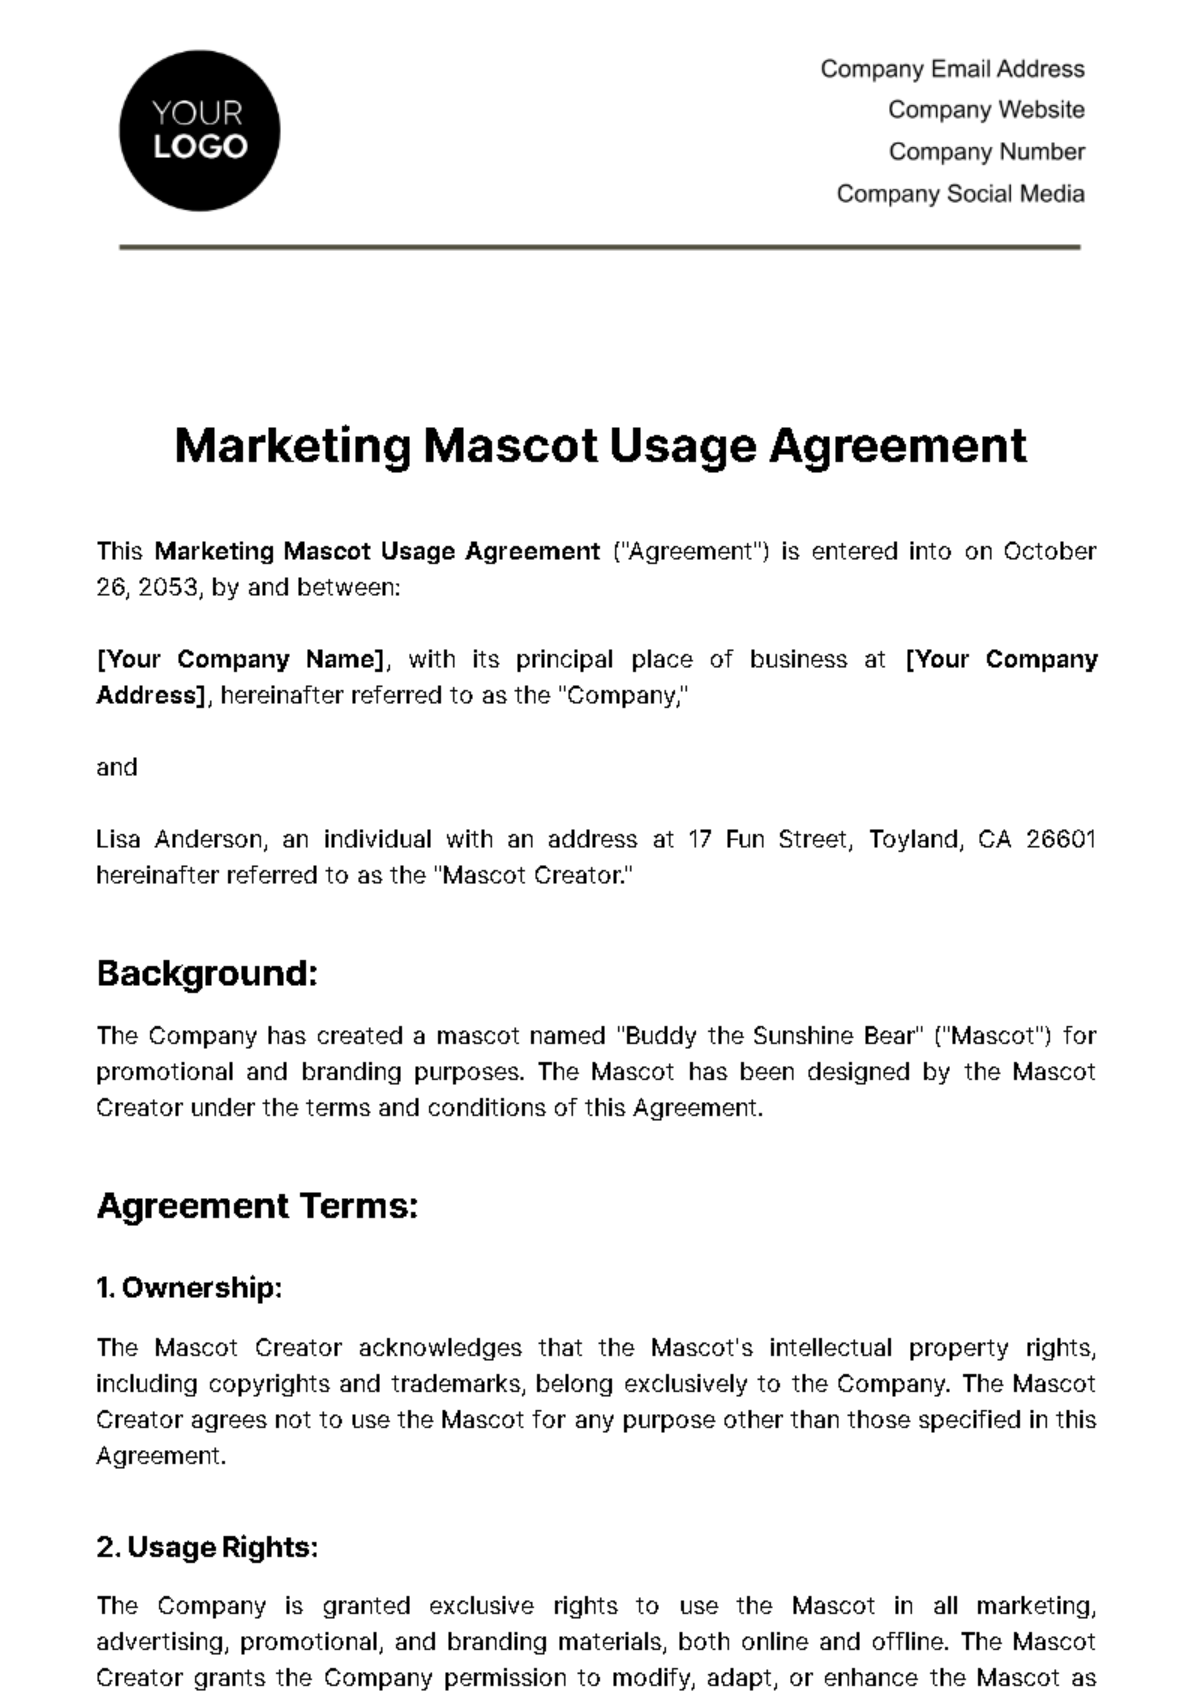 Free Marketing Mascot Usage Agreement Template